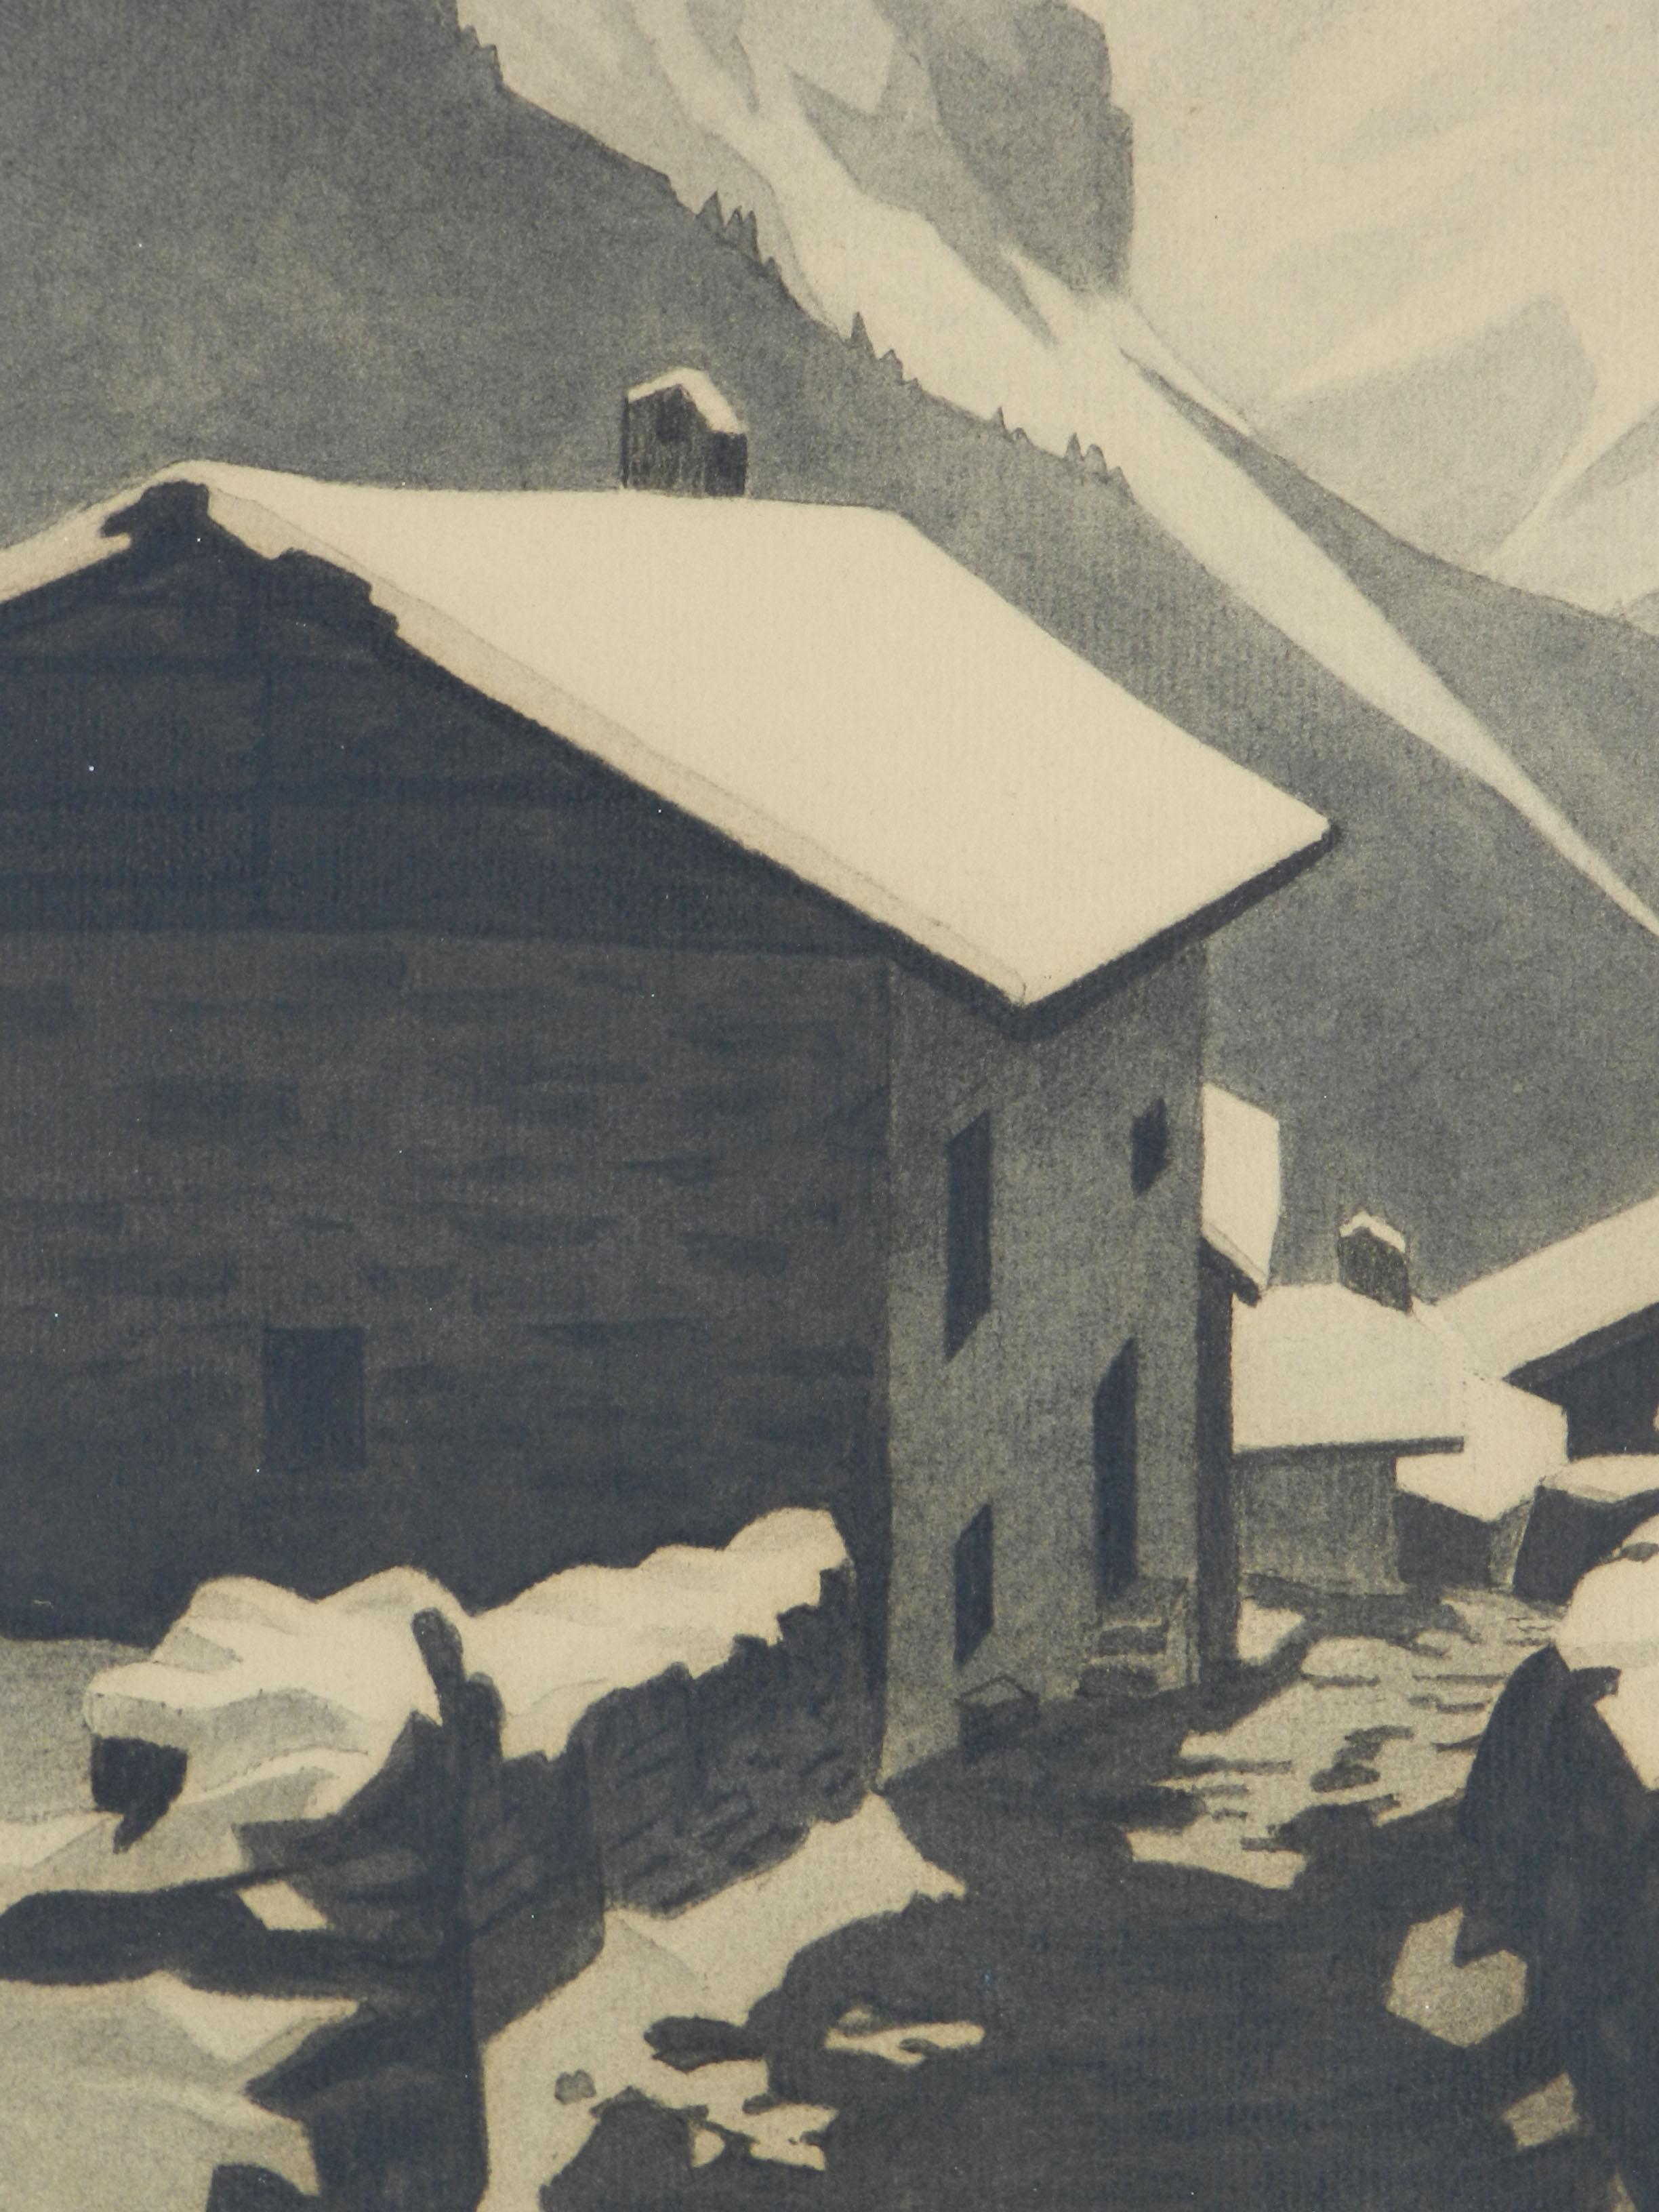 Mountain Snow Scene by Gisele Berne de Geavisie c1933
Good vintage condition 


